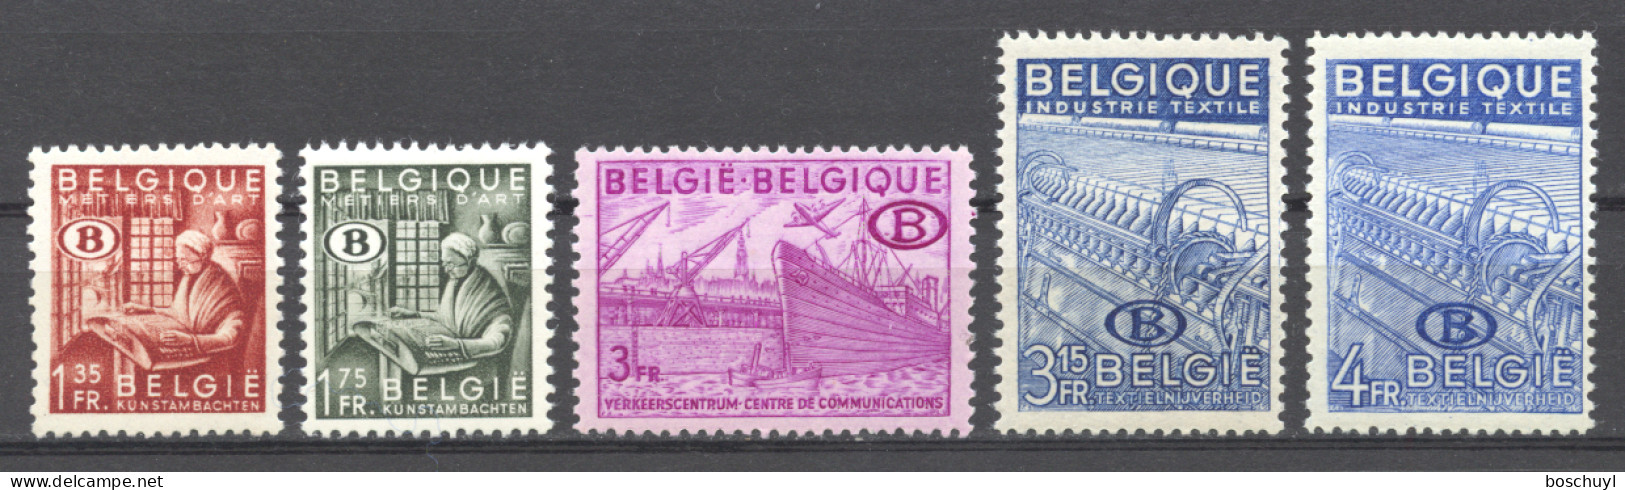 Belgium, 1948-1949, Service Stamps, Export Promotion, MNH, Michel 42-46 - Mint